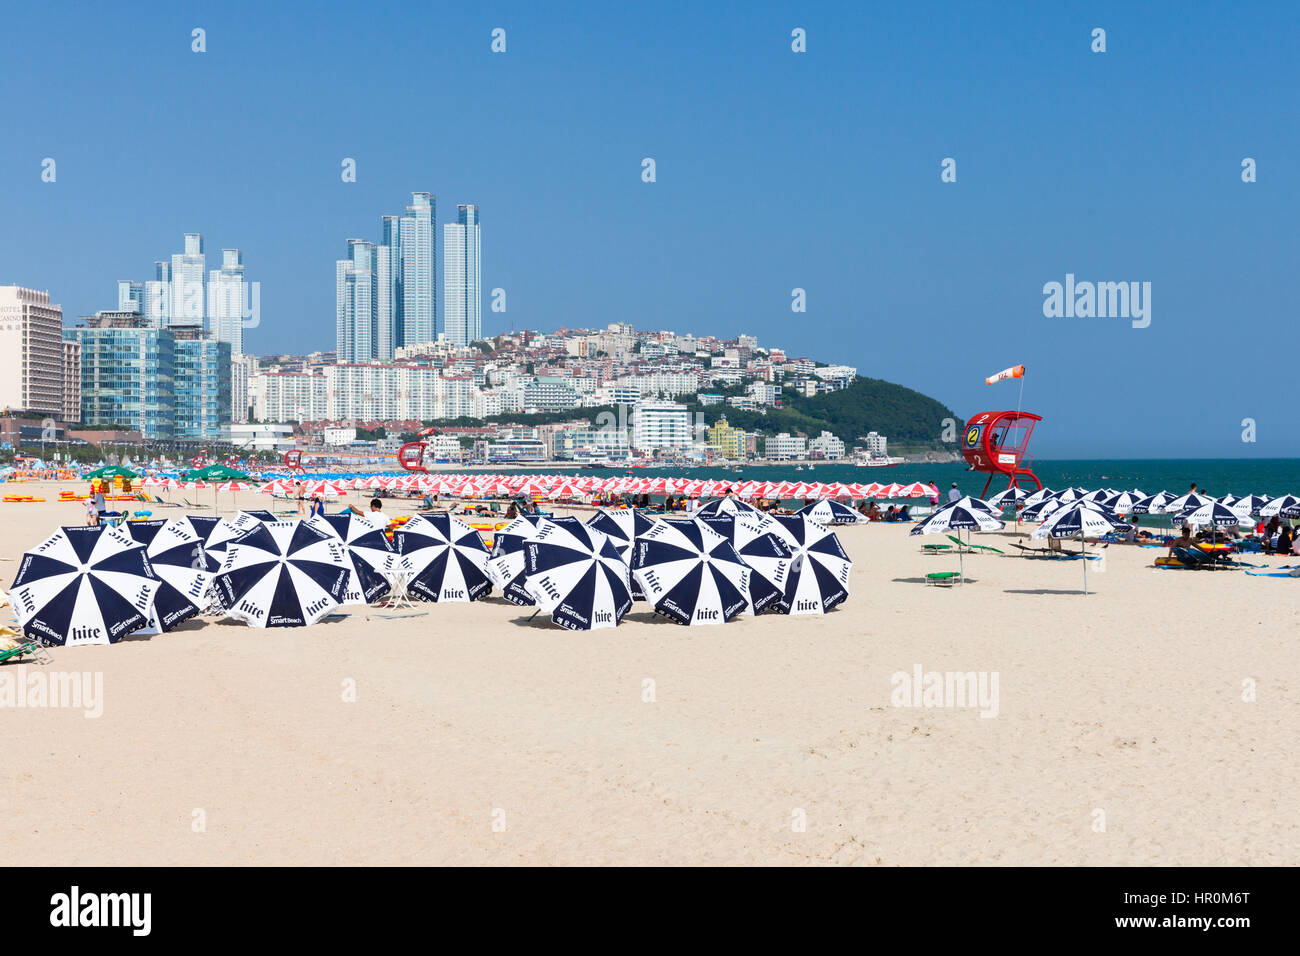 Busan, South Korea - 22 August 2014: The view of Haeundae beach one of the popular beaches of Busan Metropolitan City, the largest port of South Korea Stock Photo